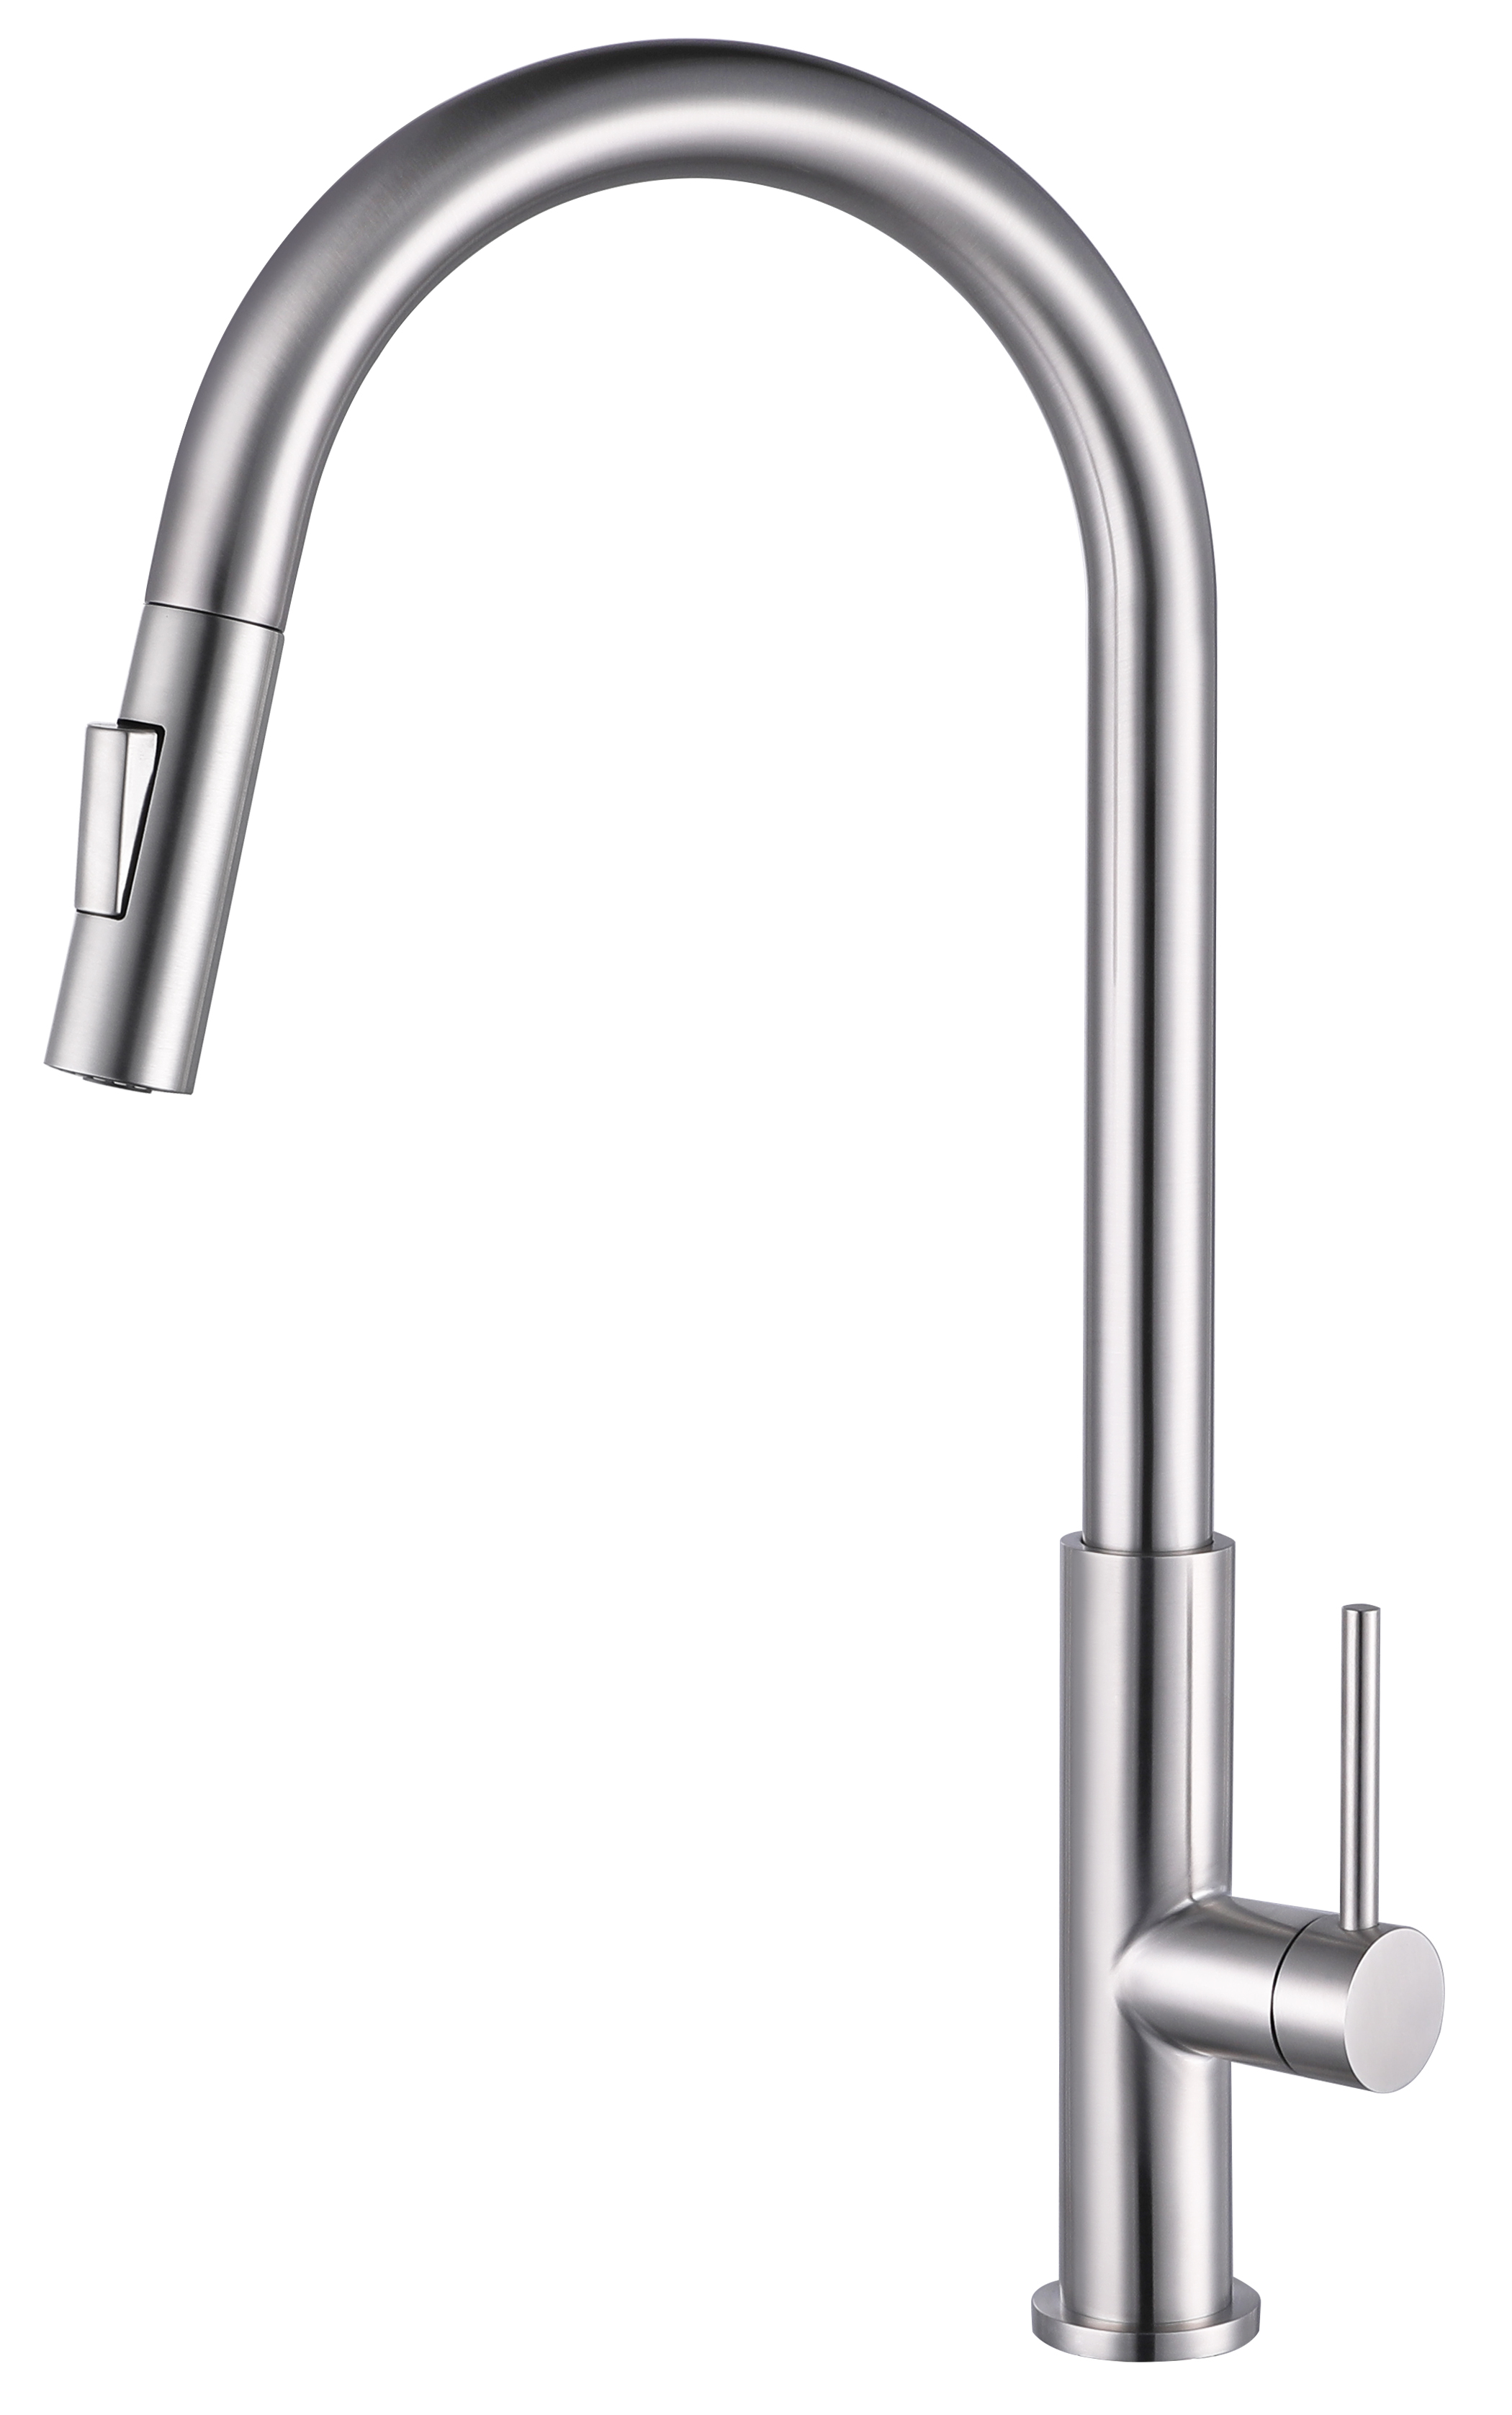 New design kitchen faucet producer